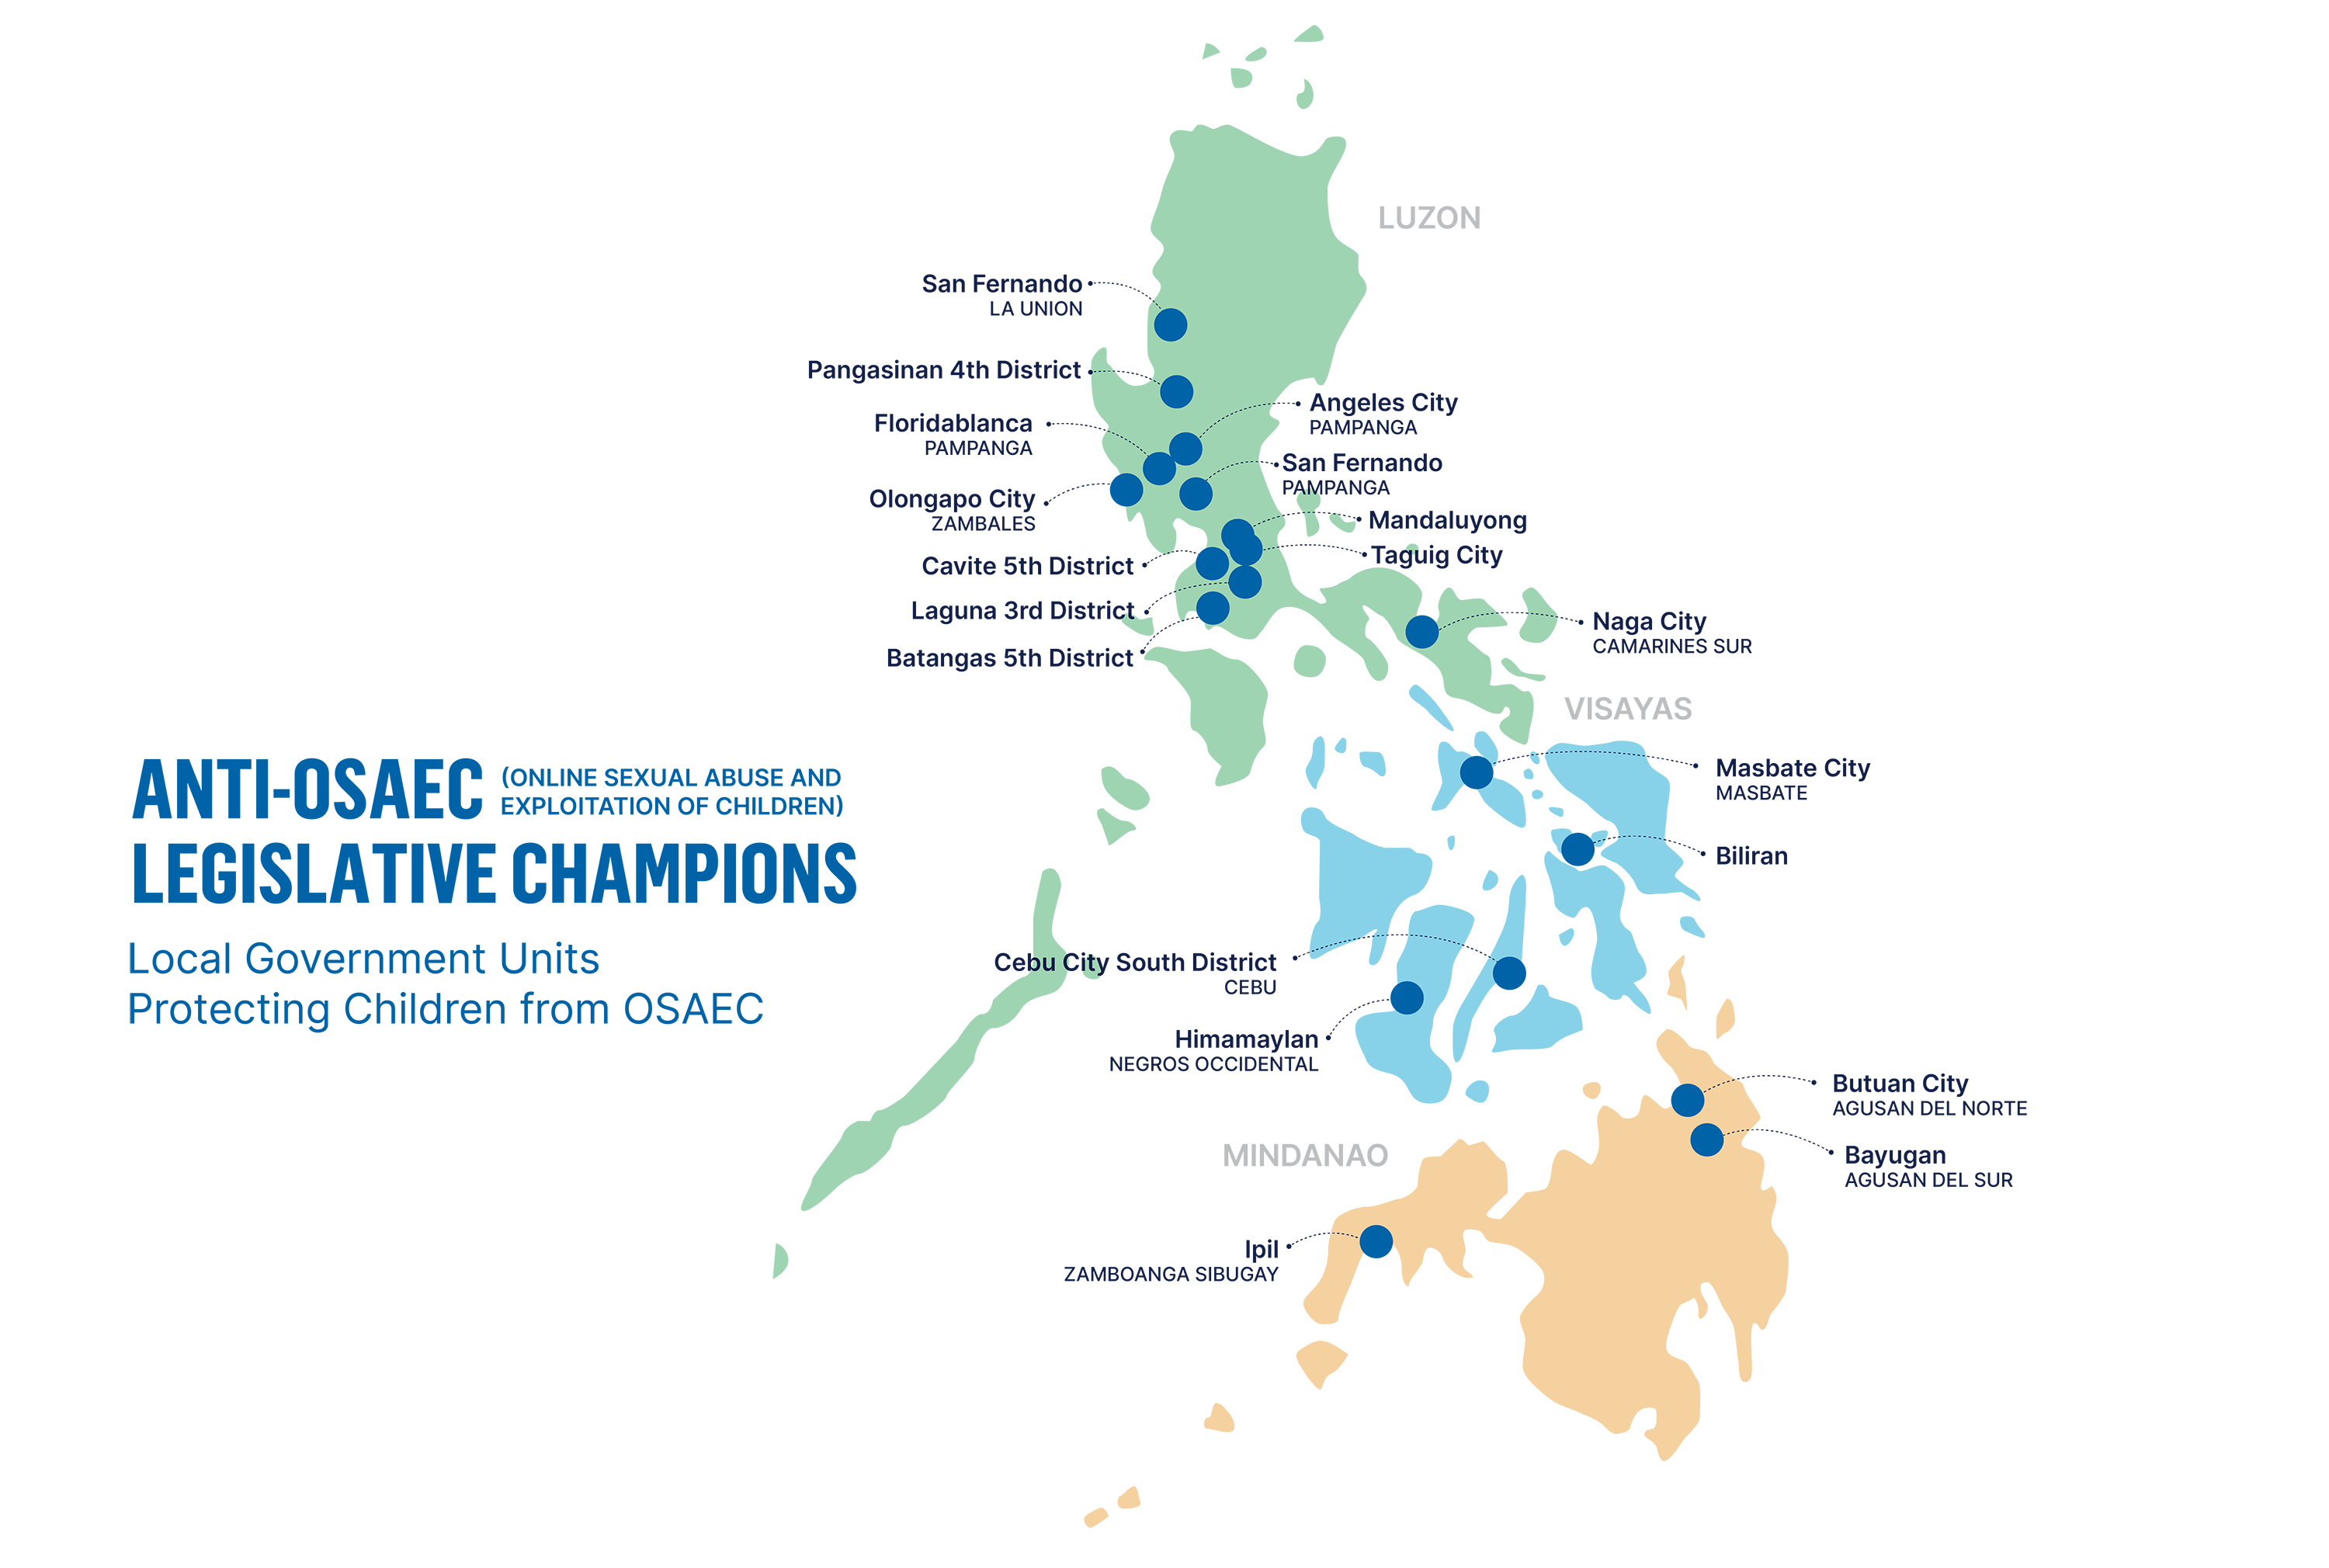 Philippine Map showing Localities of the Legislators